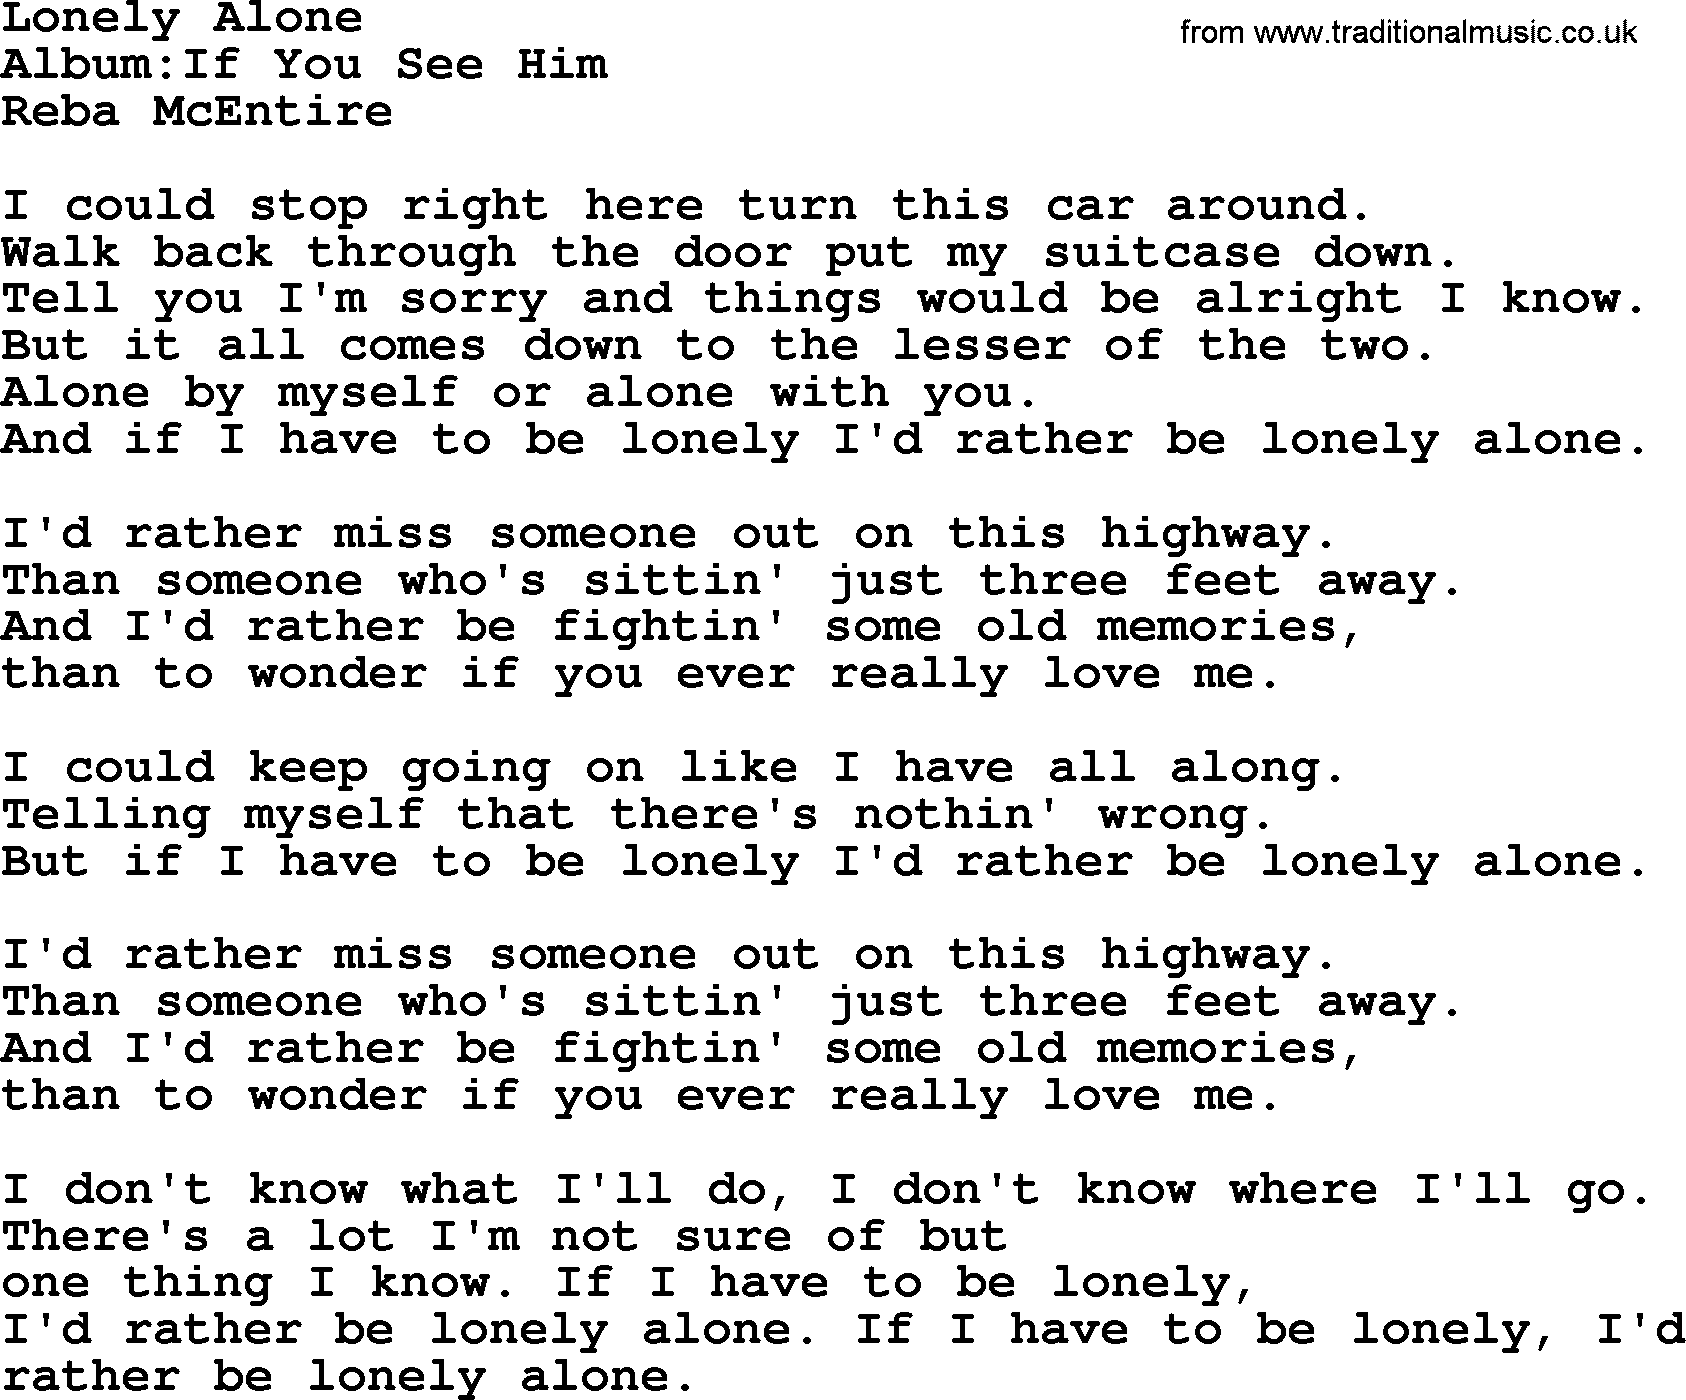 Reba McEntire song: Lonely Alone lyrics